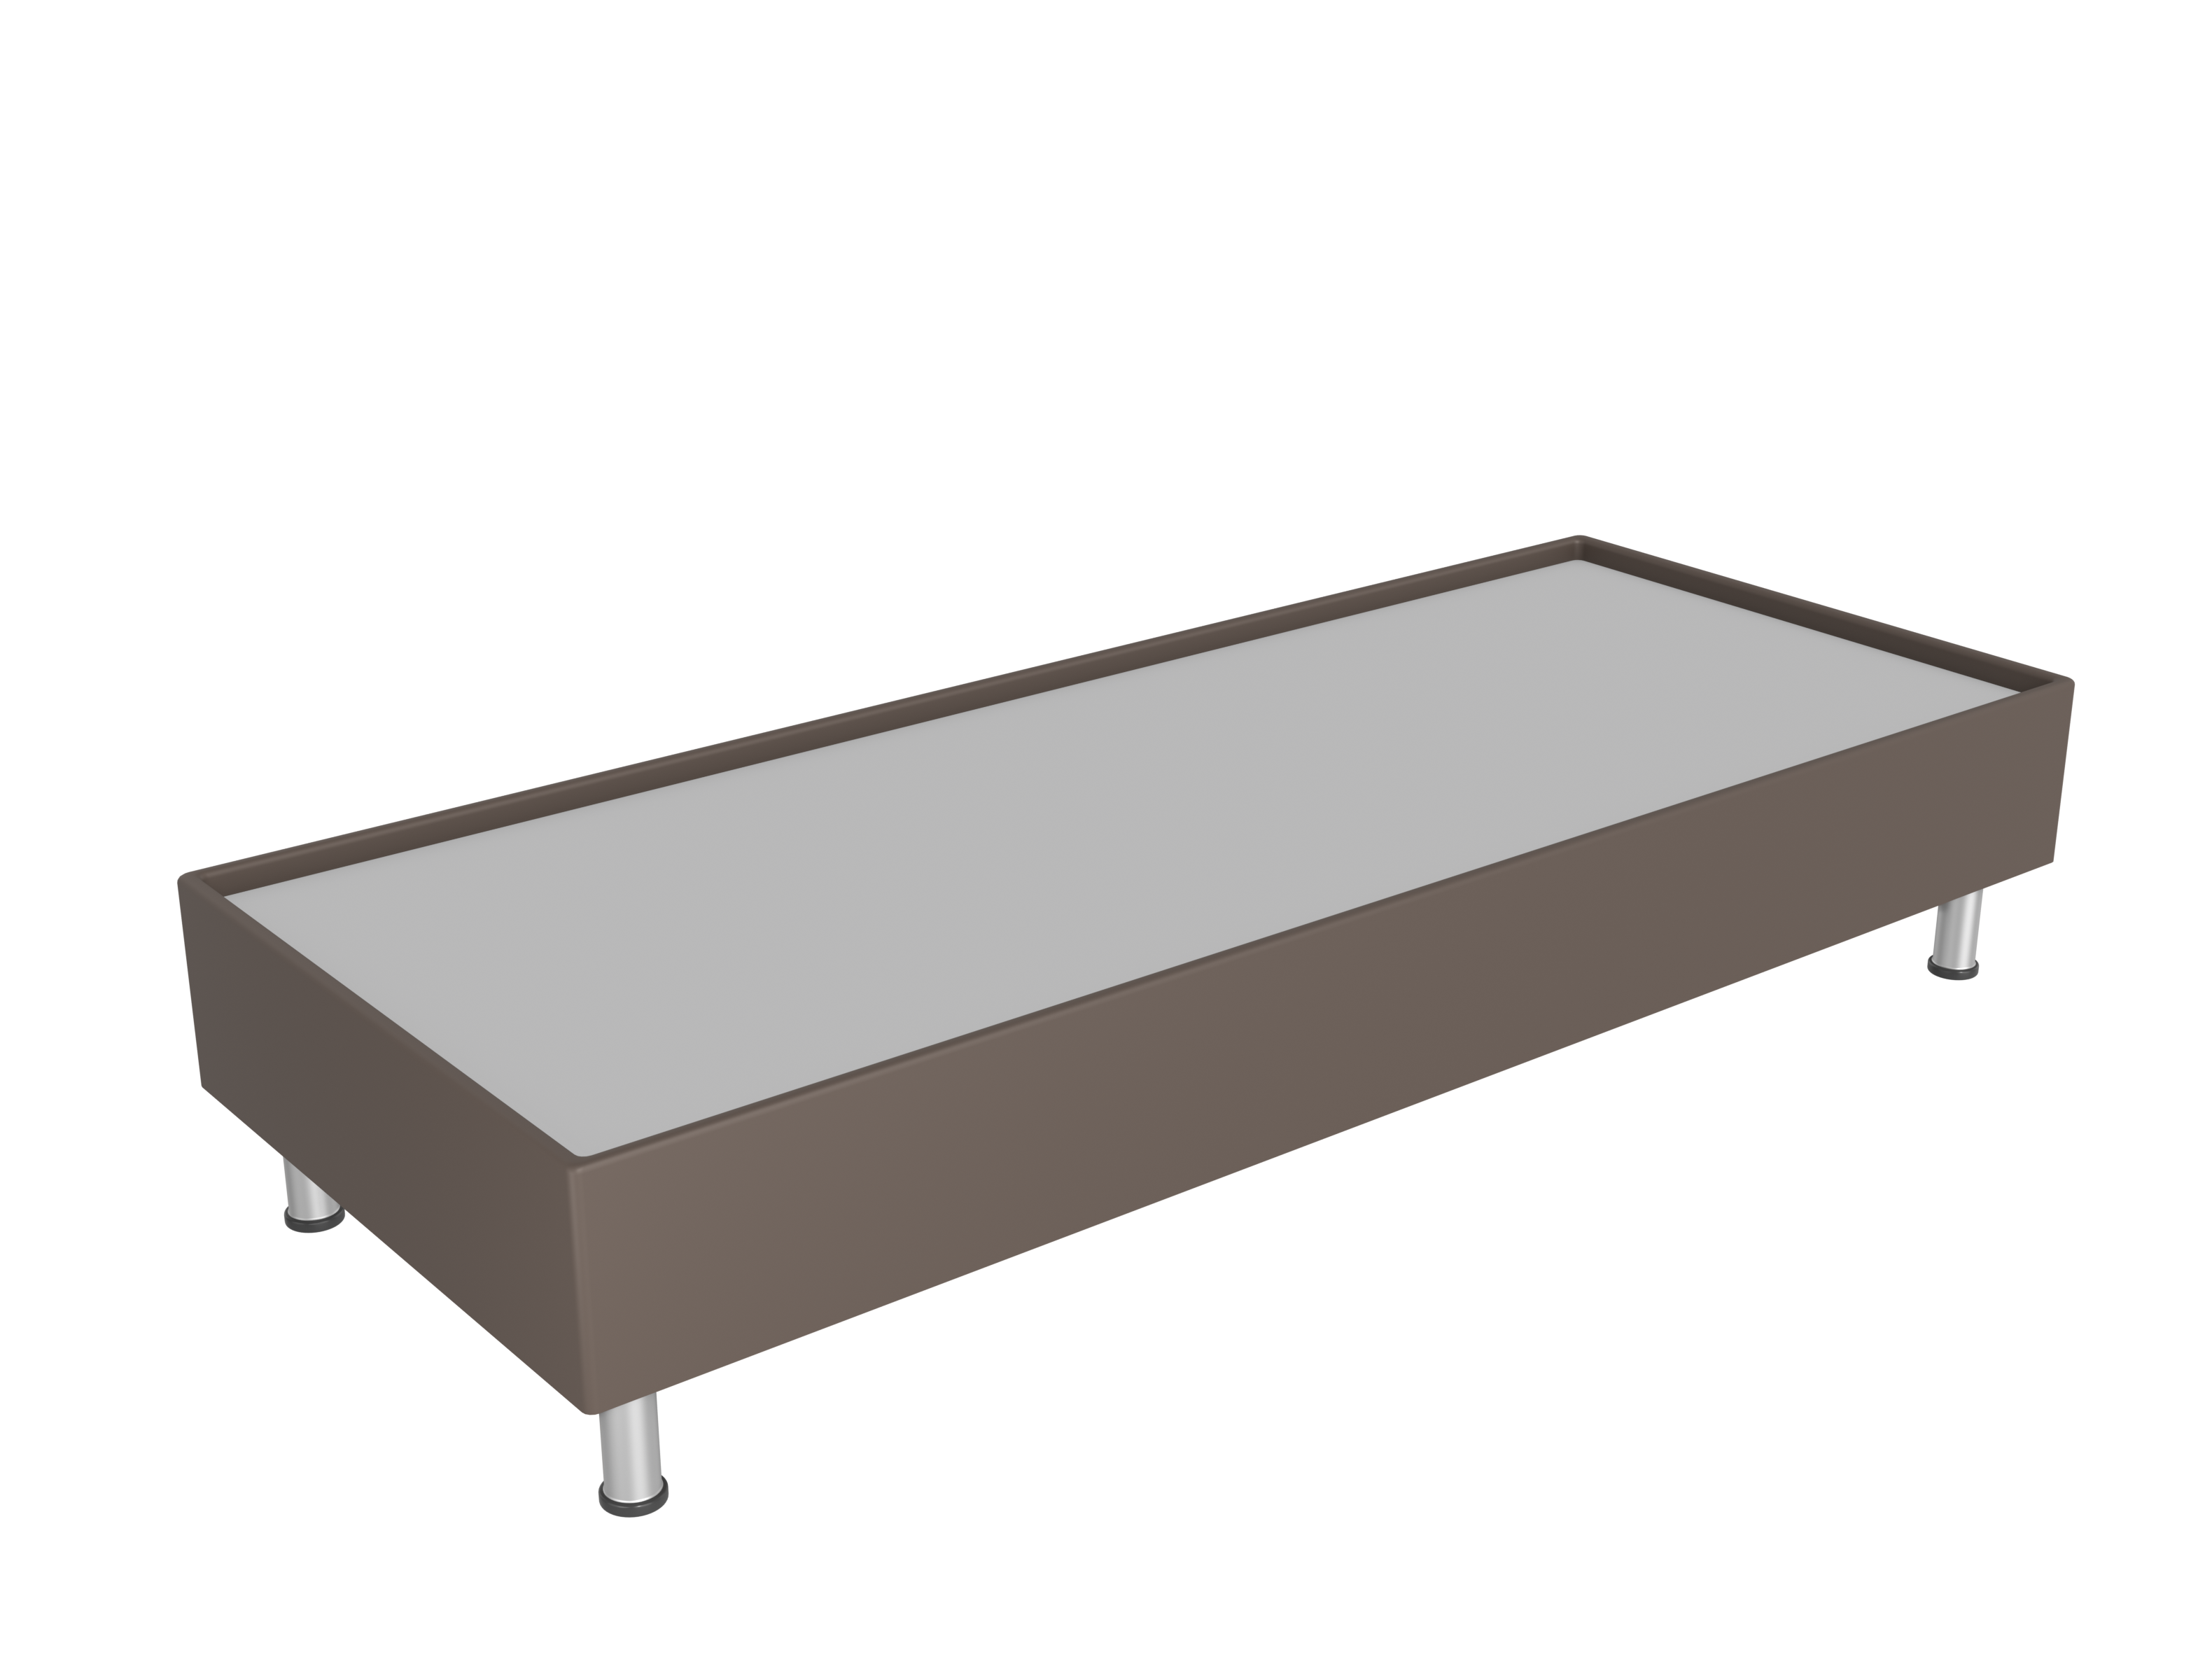 Spring box кровать основание — СБ-200/90 коричневый (2000х900х380 мм)